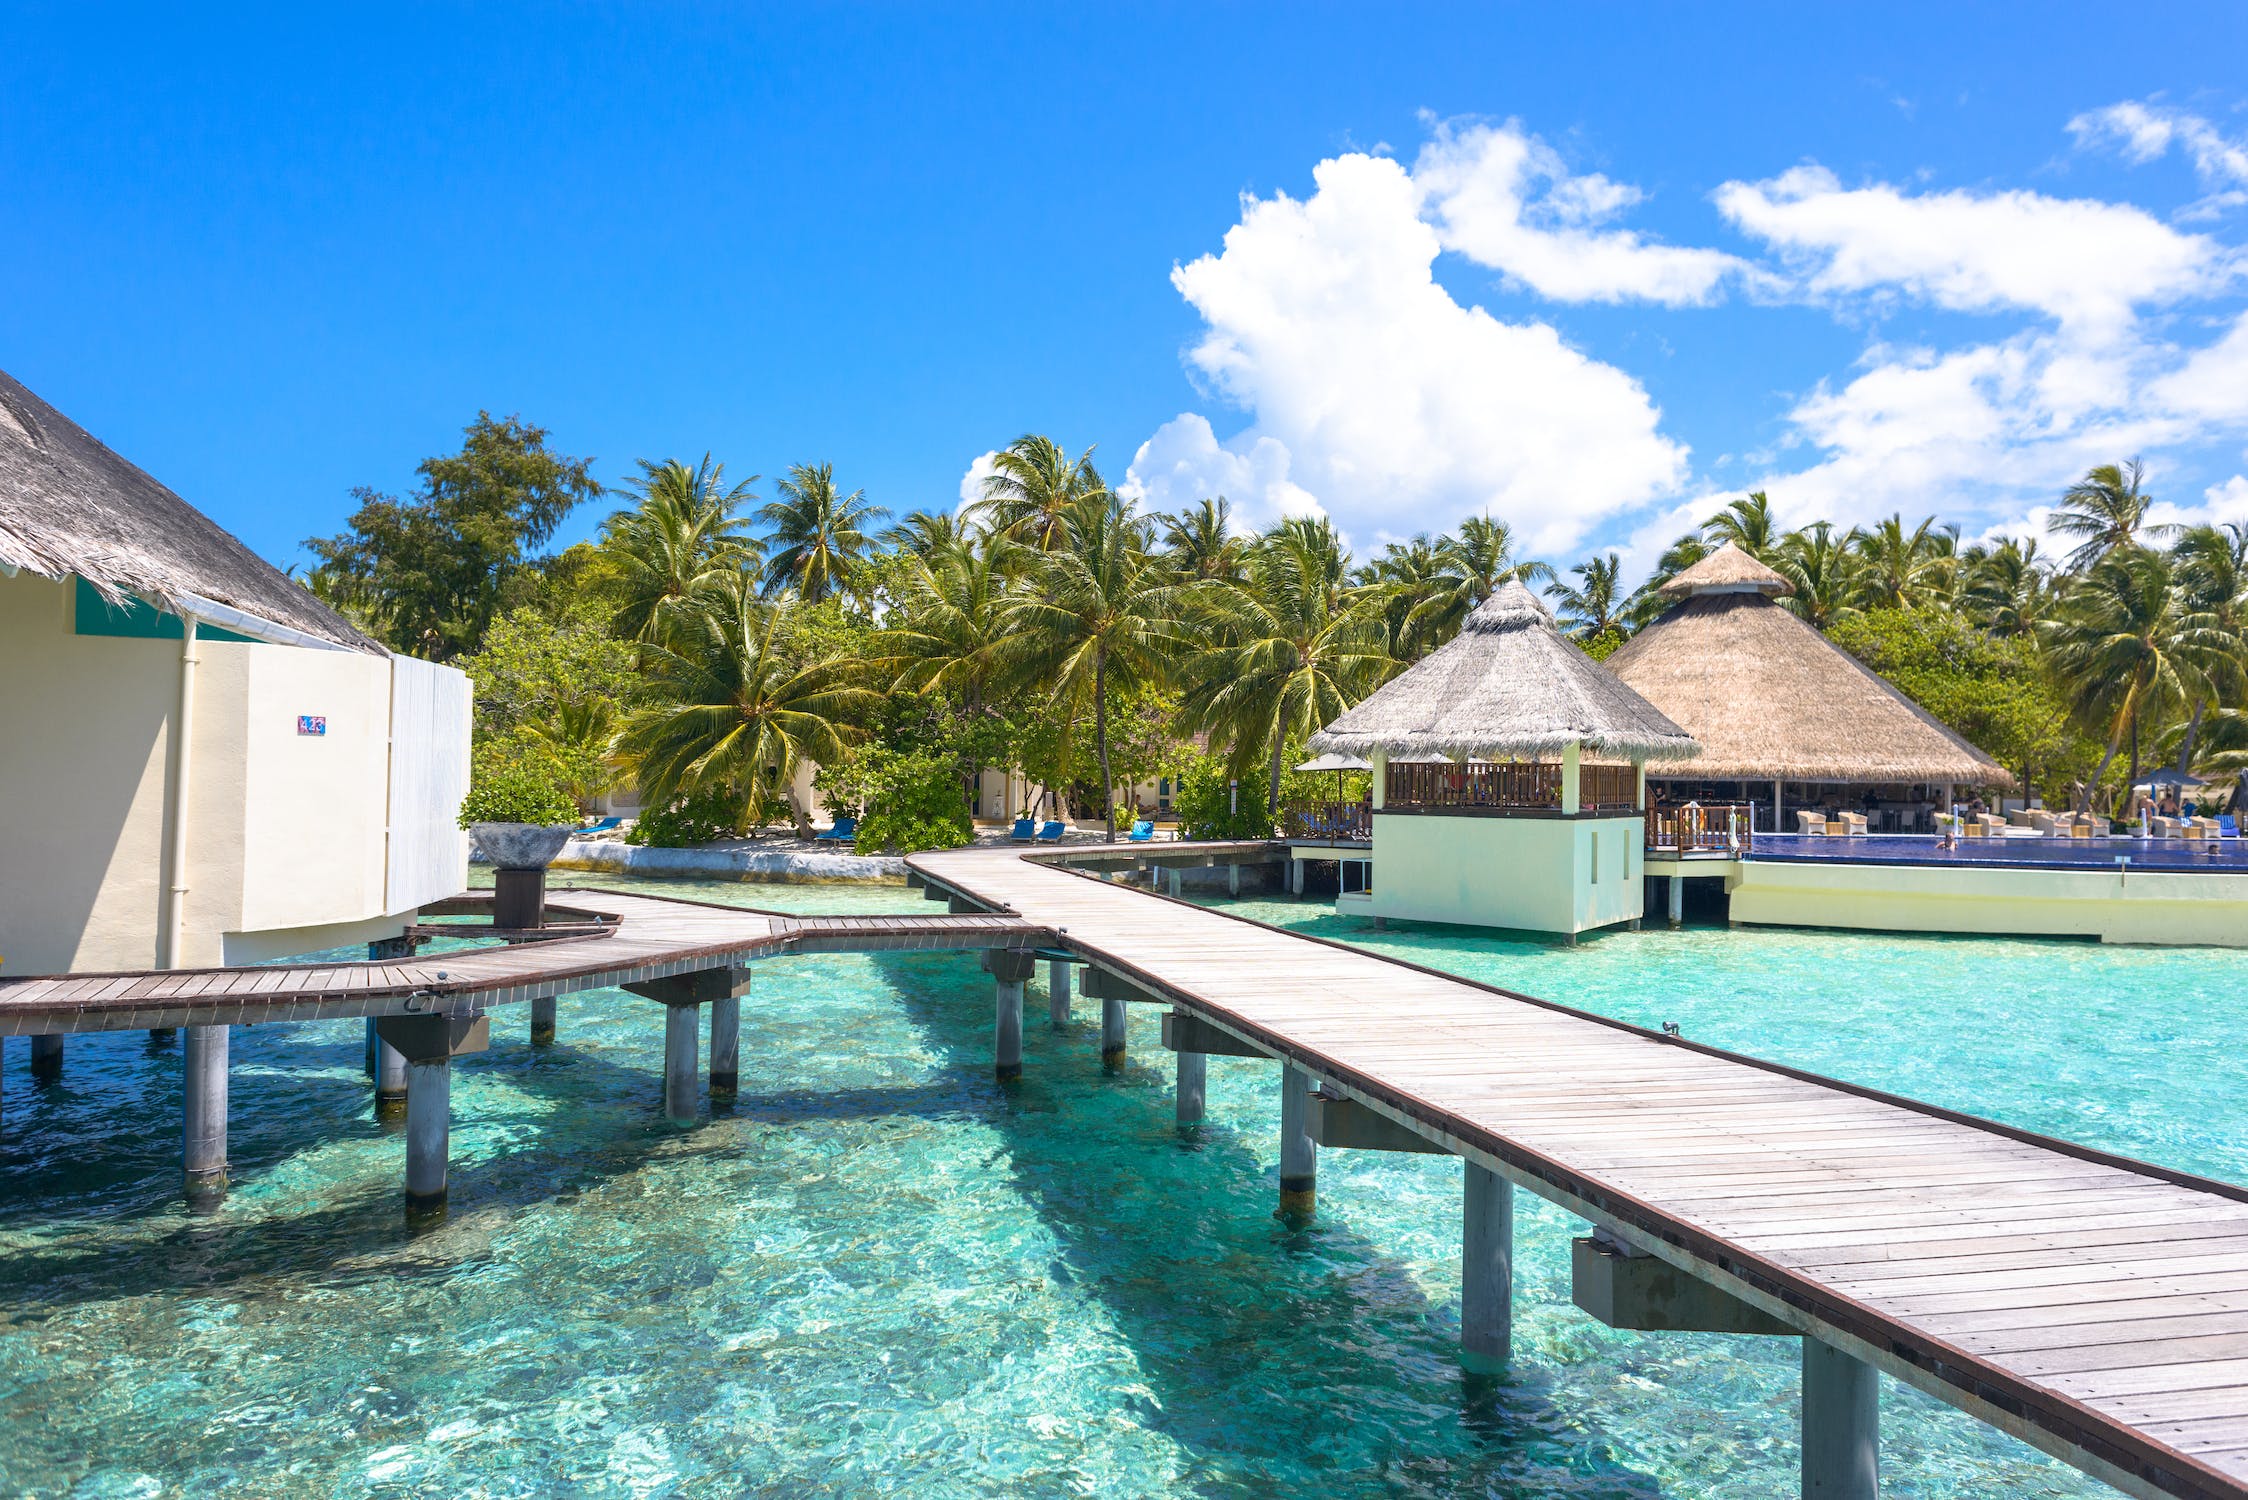 Maldives travel, Maldives resorts, overwater bungalows, coral reefs